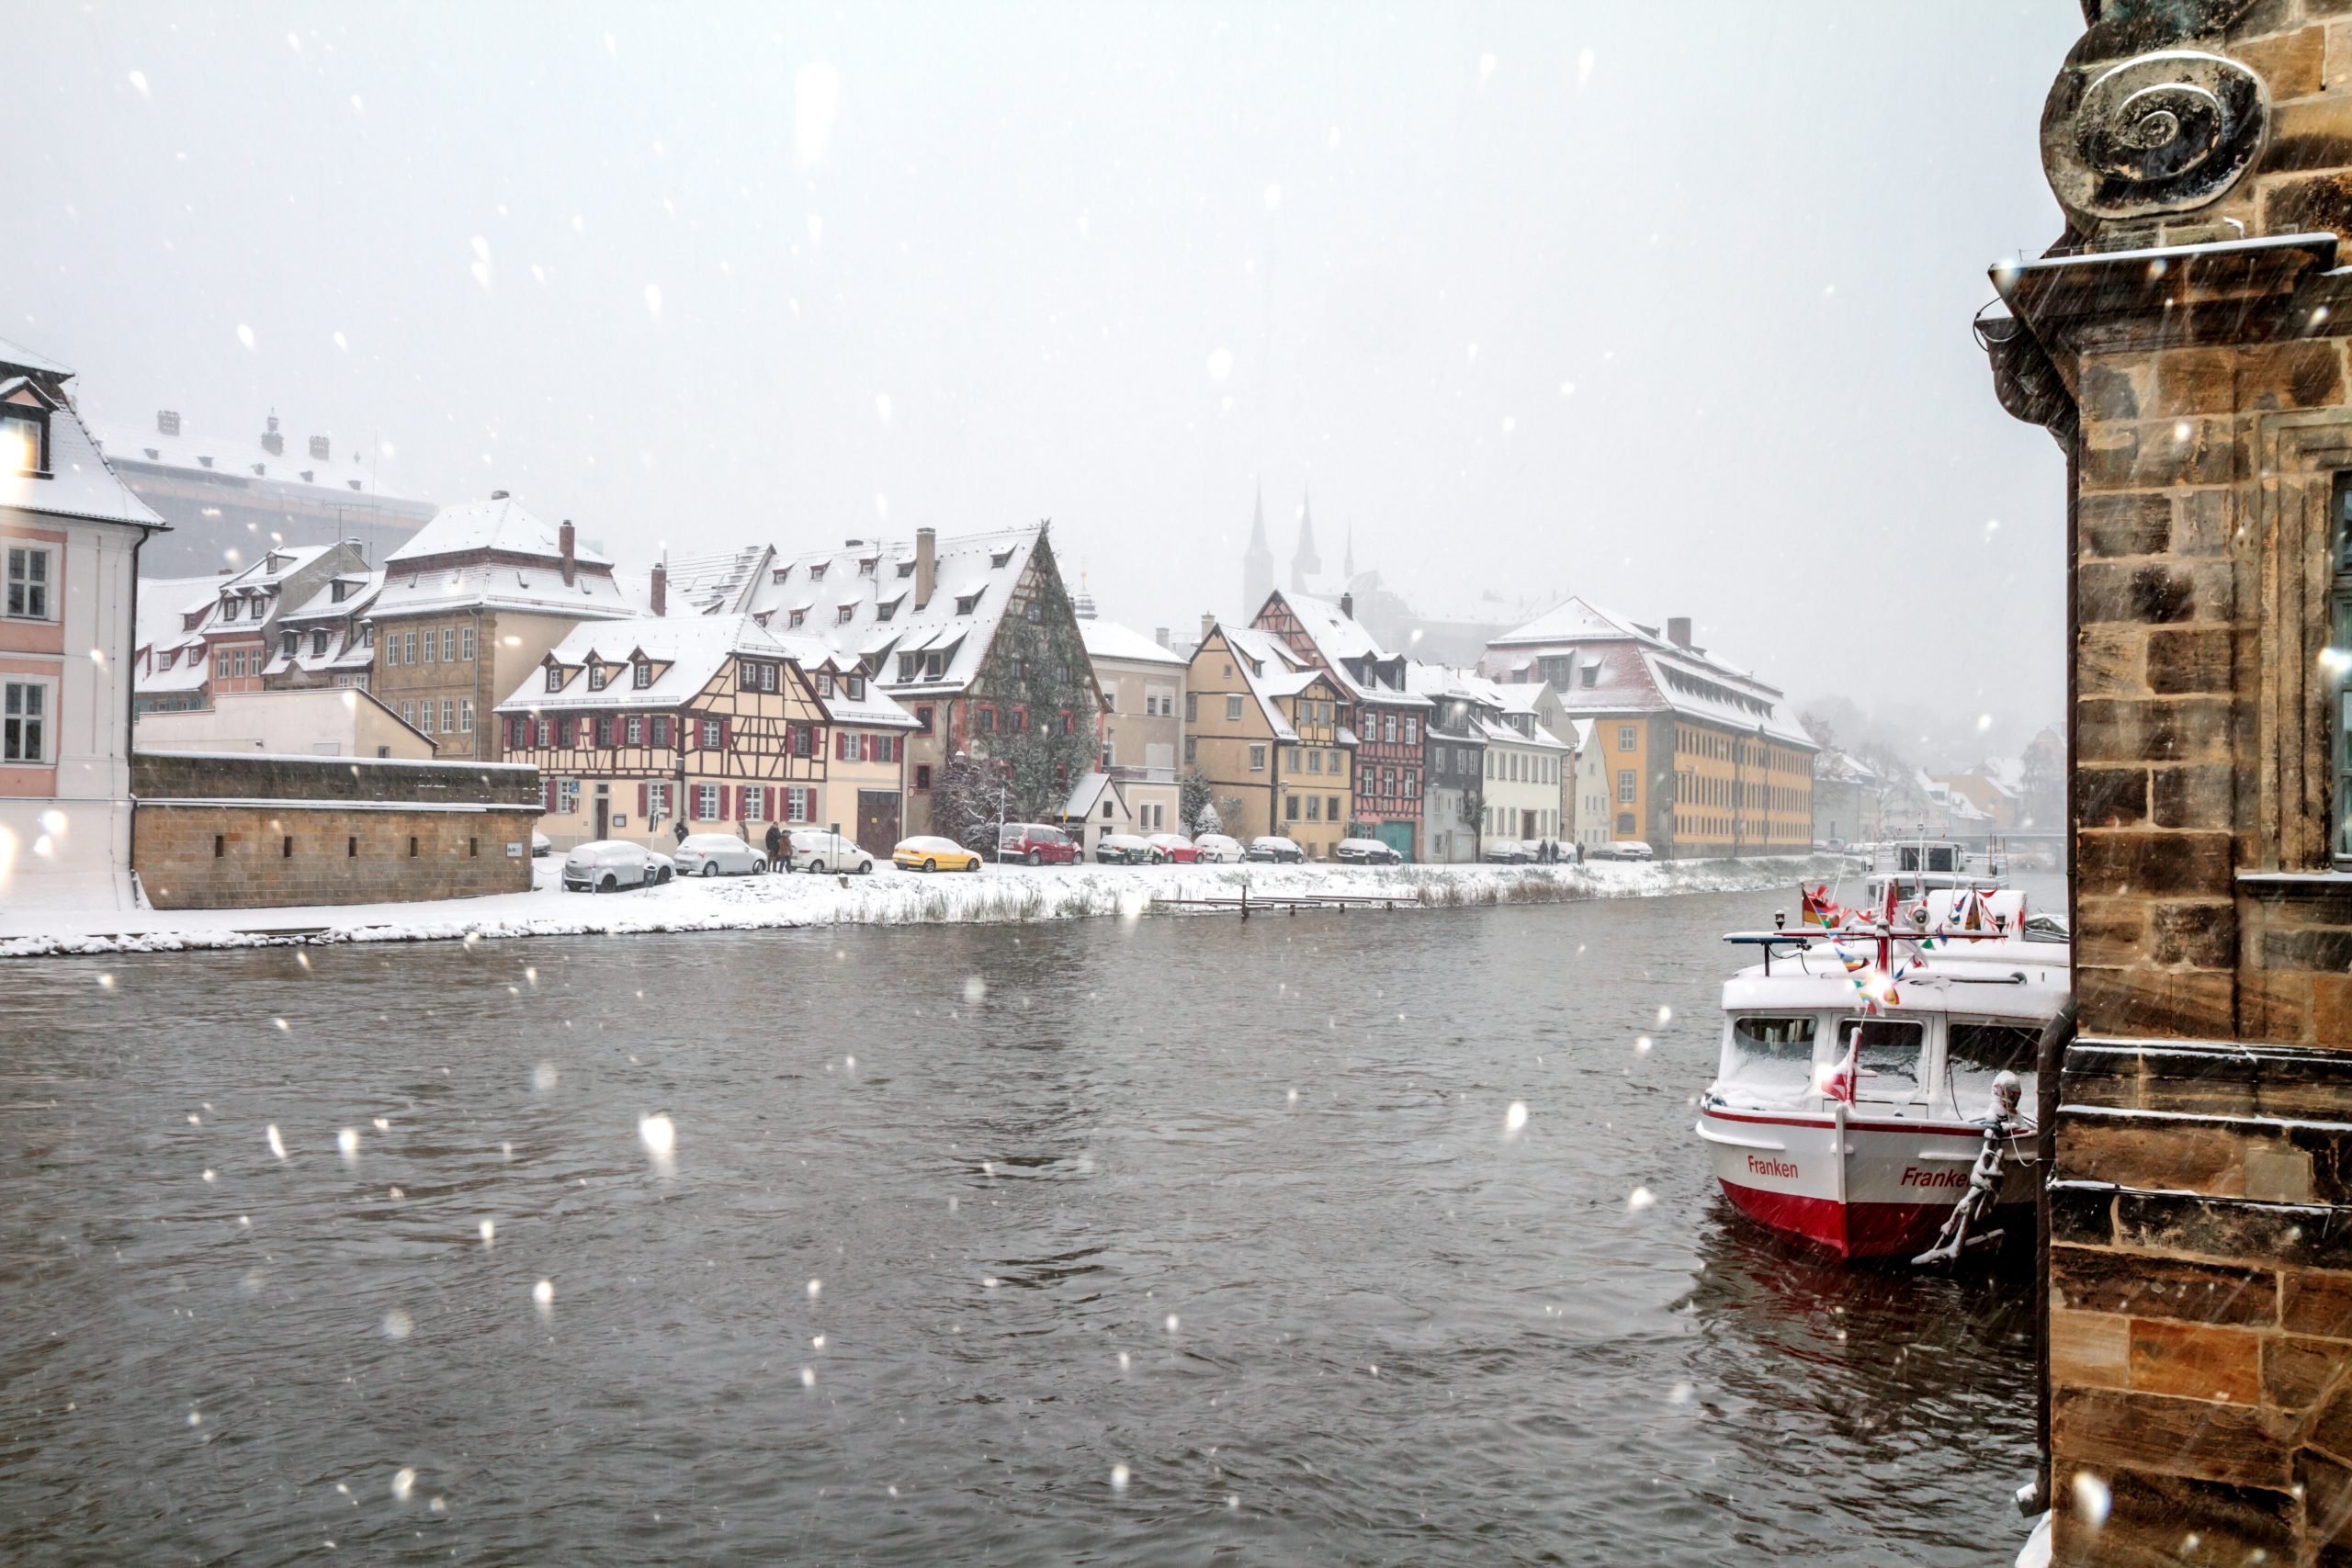 Bemberg, Germany - winter wonderland places to visit